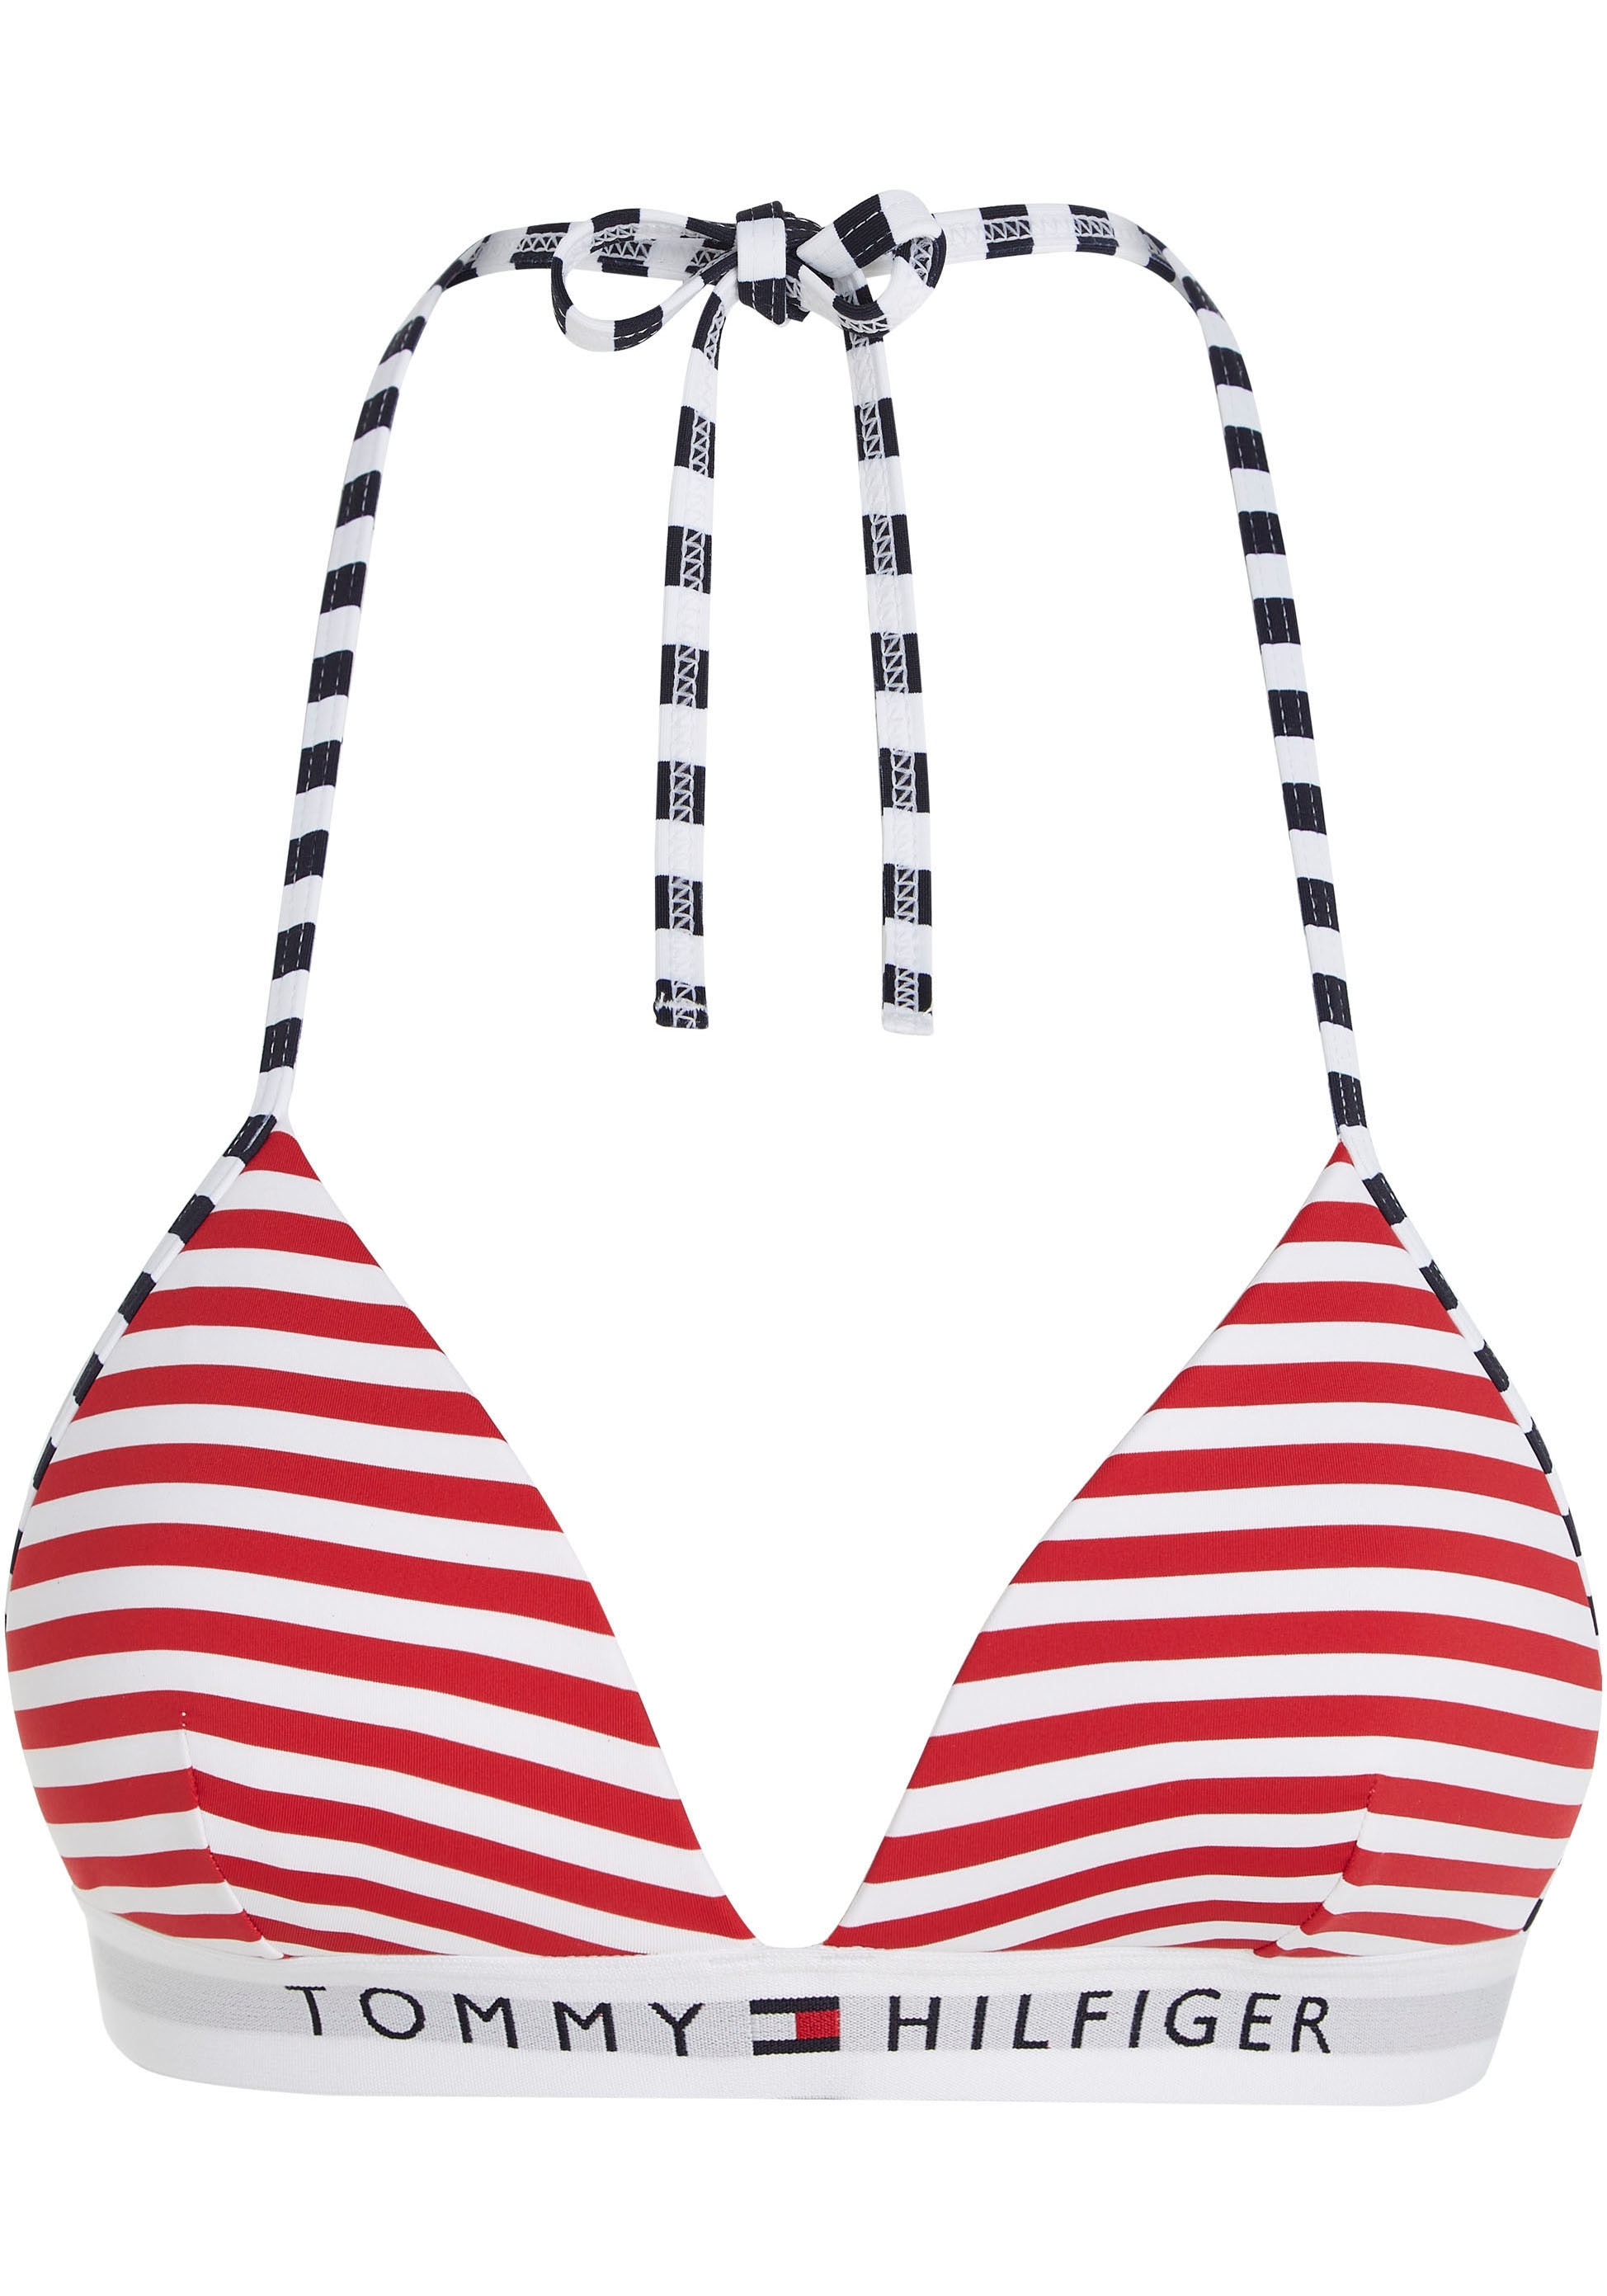 Tommy »TH ♕ Hilfiger-Branding mit FIXED Triangel-Bikini-Top FOAM versandkostenfrei TRIANGLE Swimwear Tommy PRINT«, Hilfiger kaufen